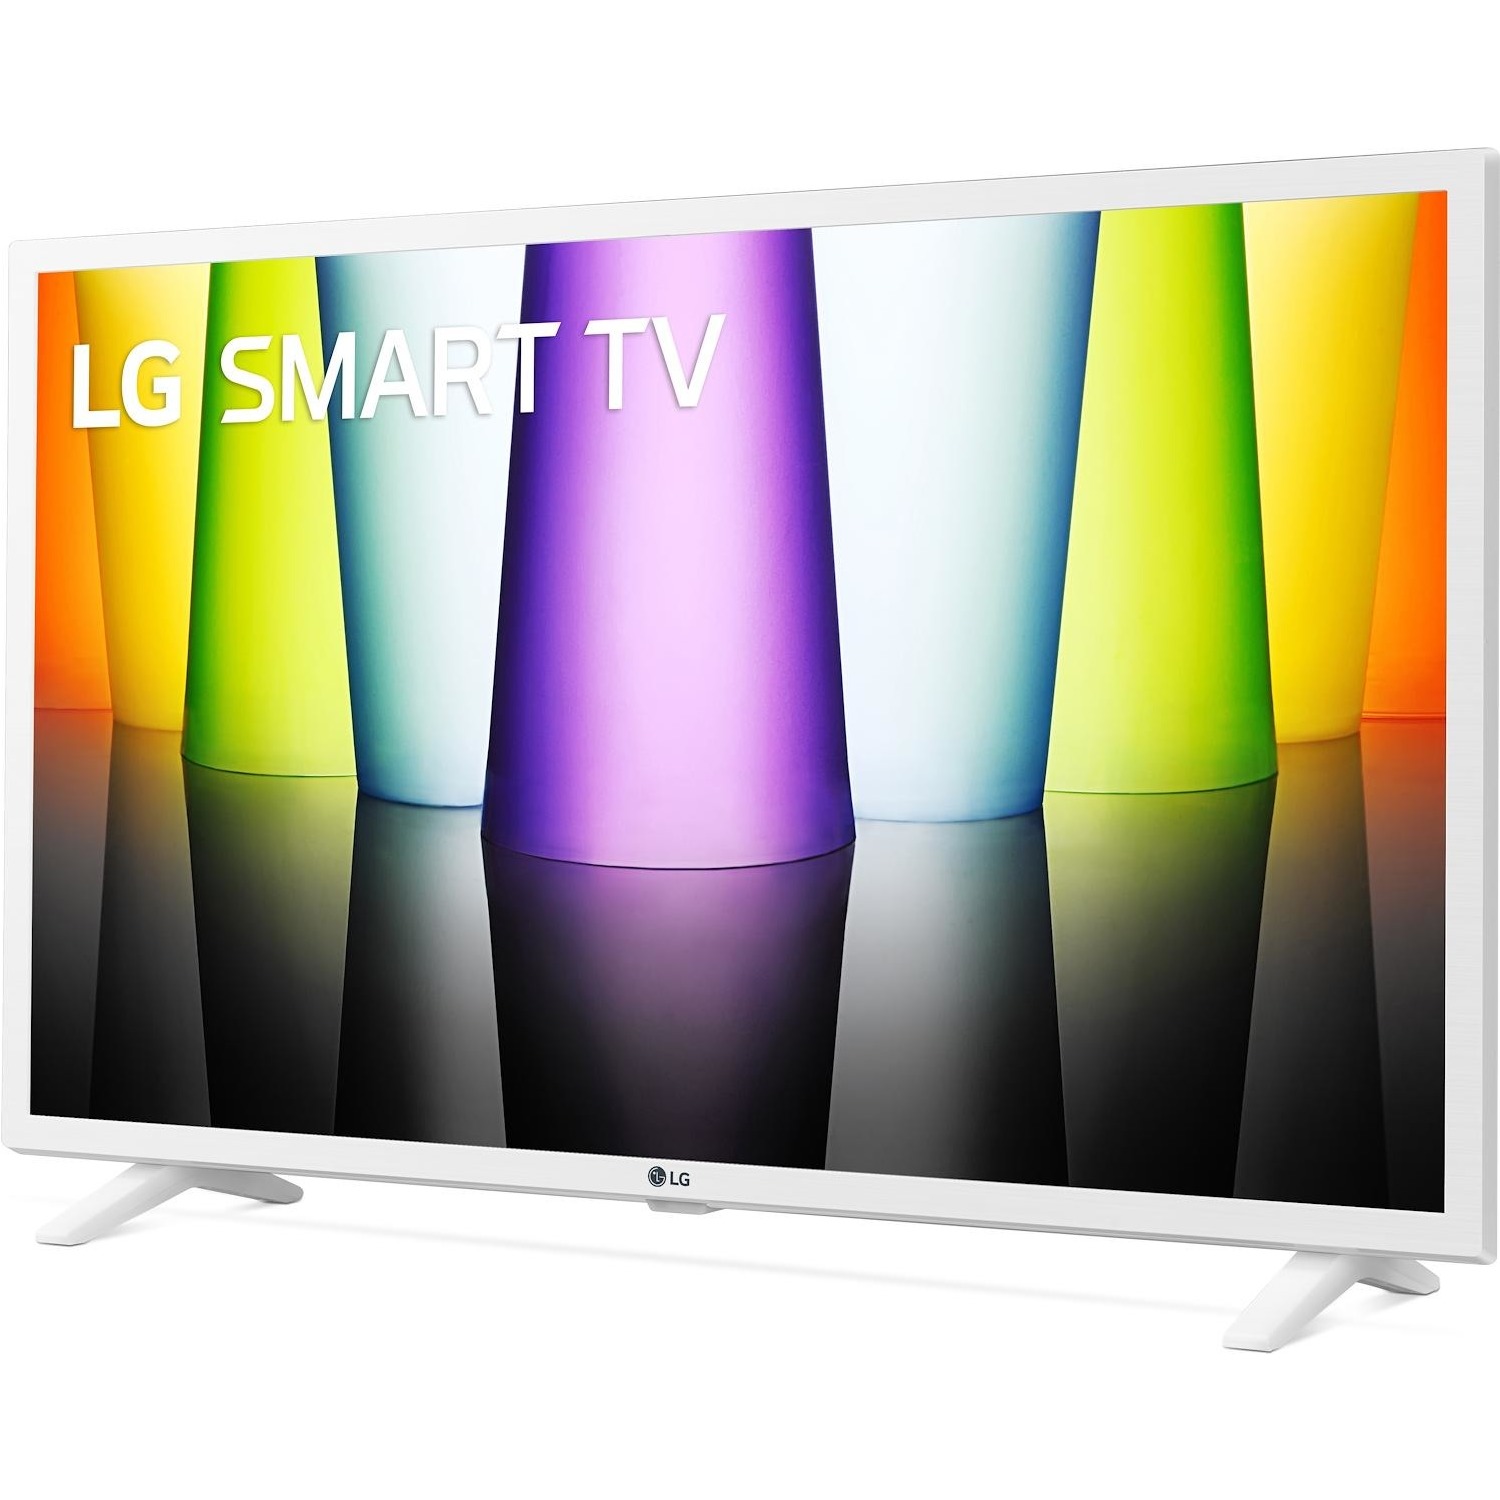 Immagine per TV LED Smart LG 32LQ63806 da DIMOStore